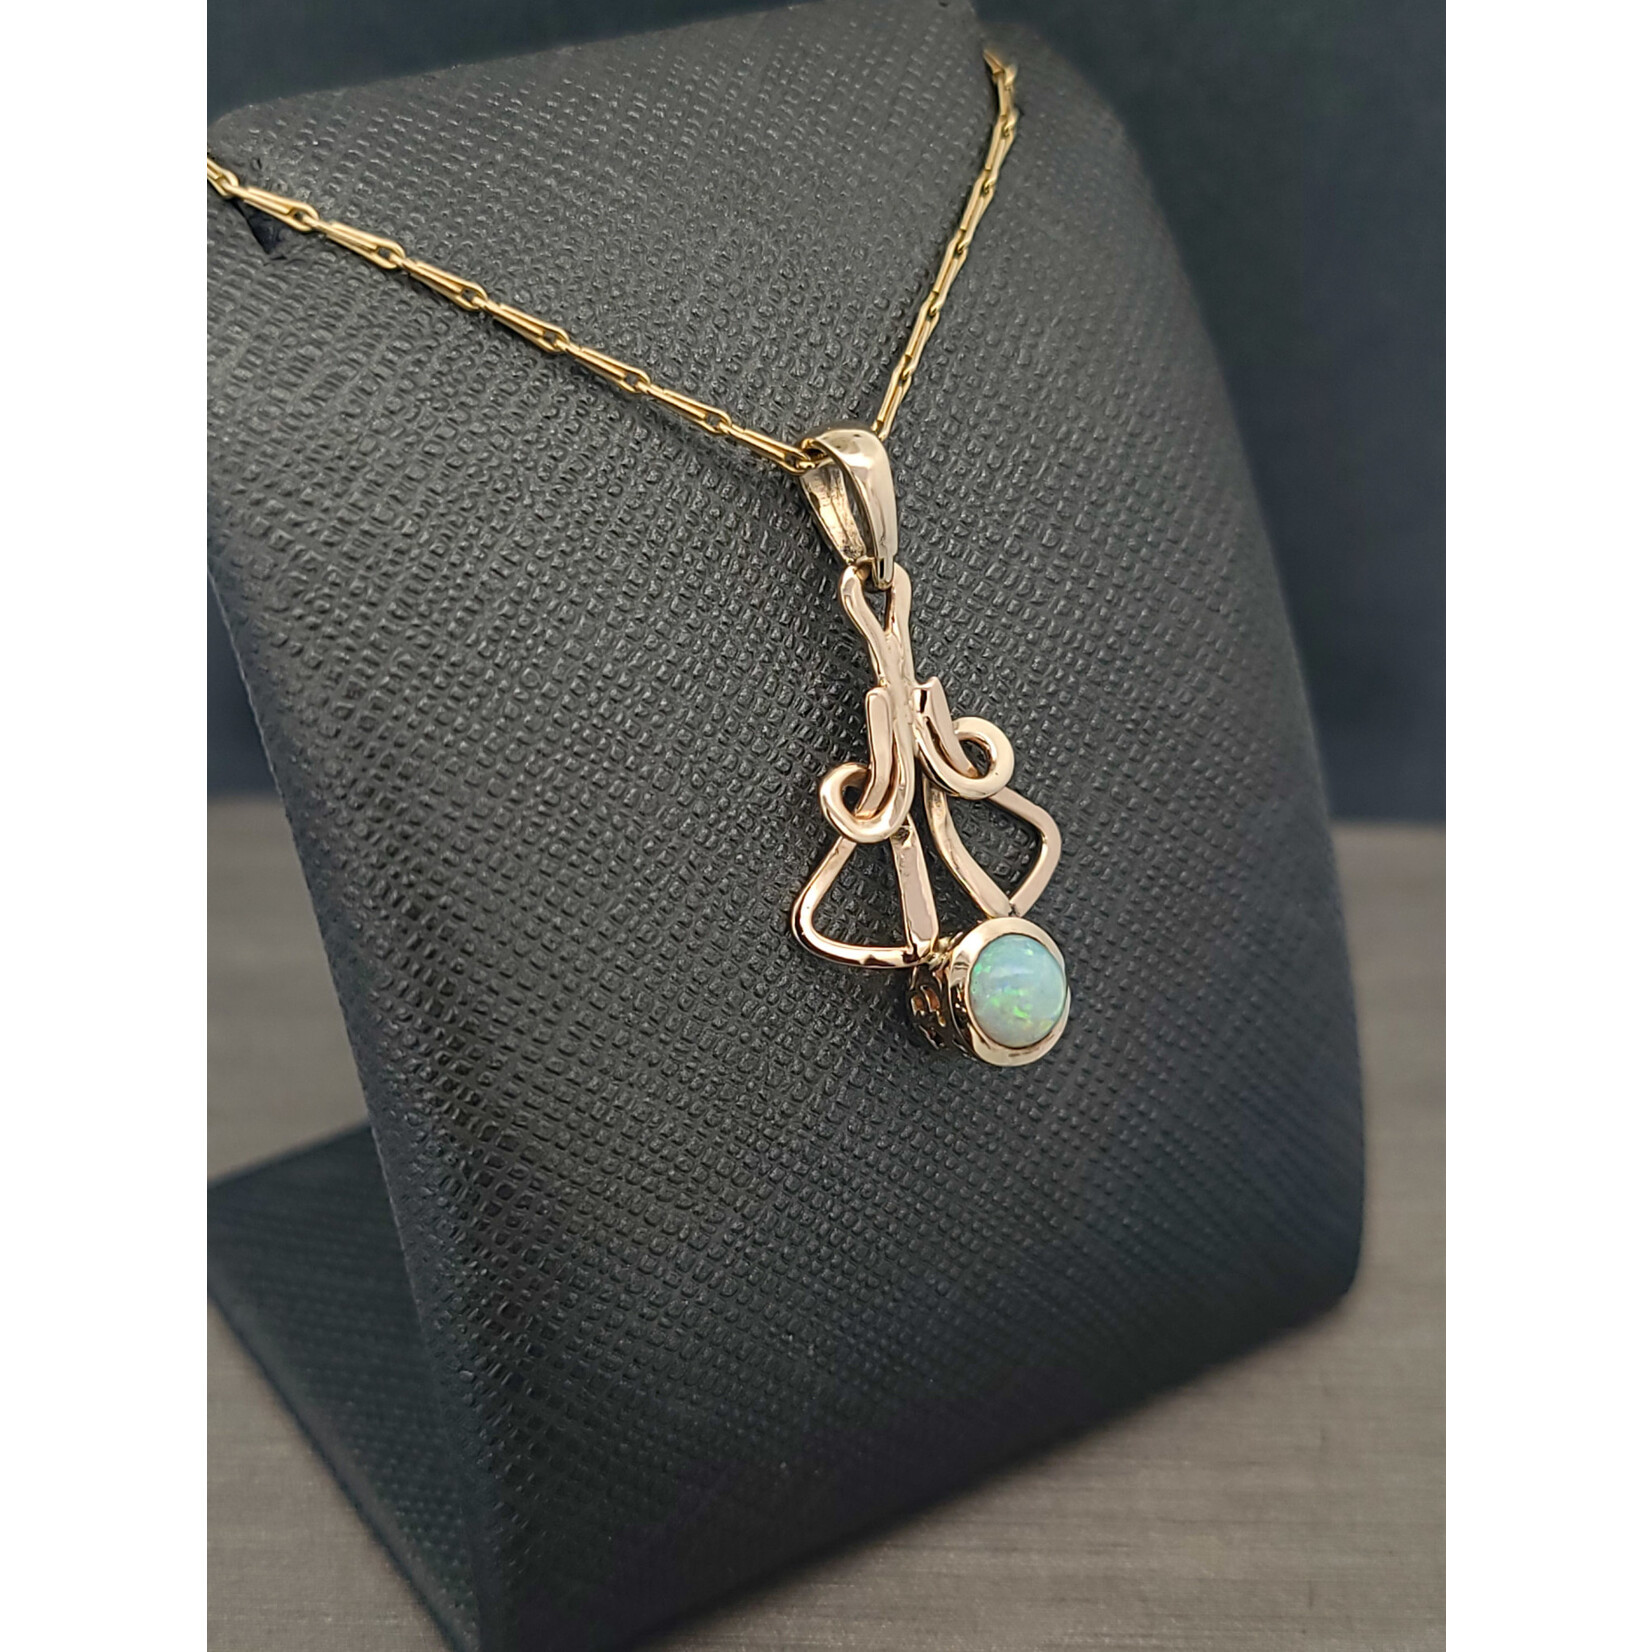 Modern Heirloom® Nouveau Wire Necklace. Opal